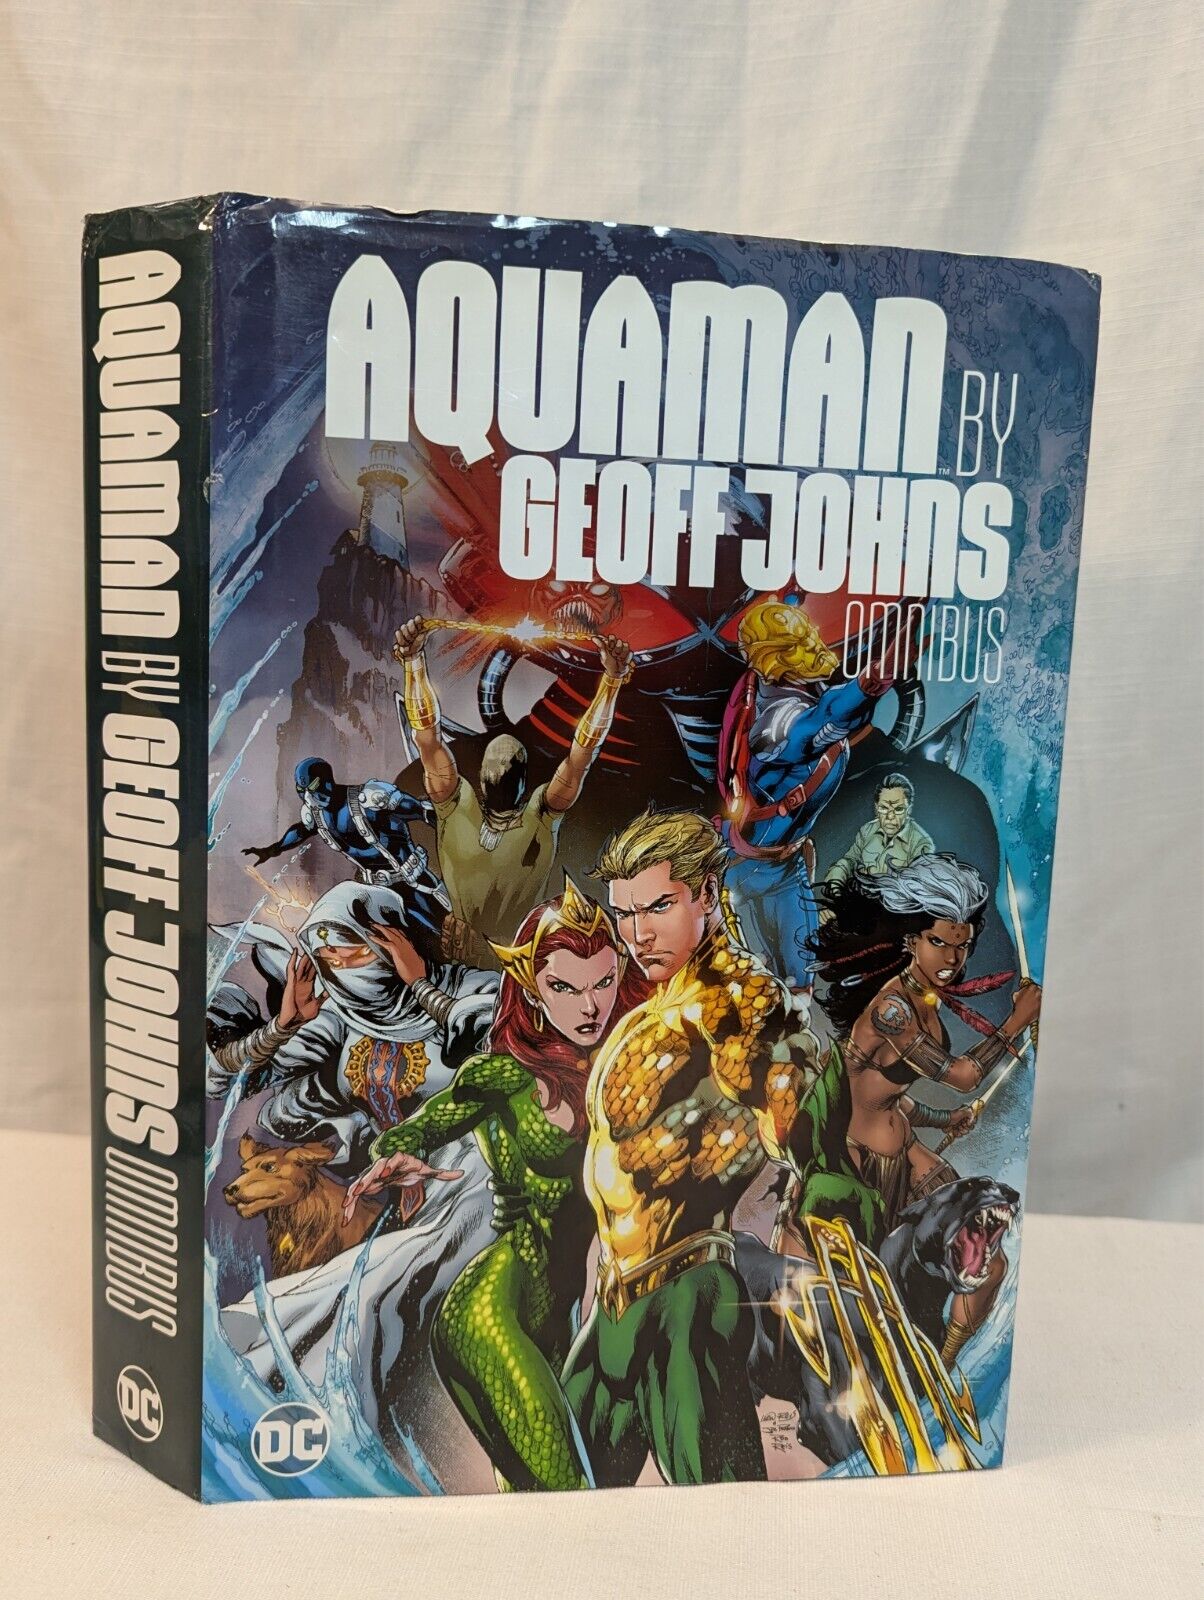 Aquaman by Geoff Johns Omnibus, DC Comics Hardcover Graphic Novel, 1st Printing